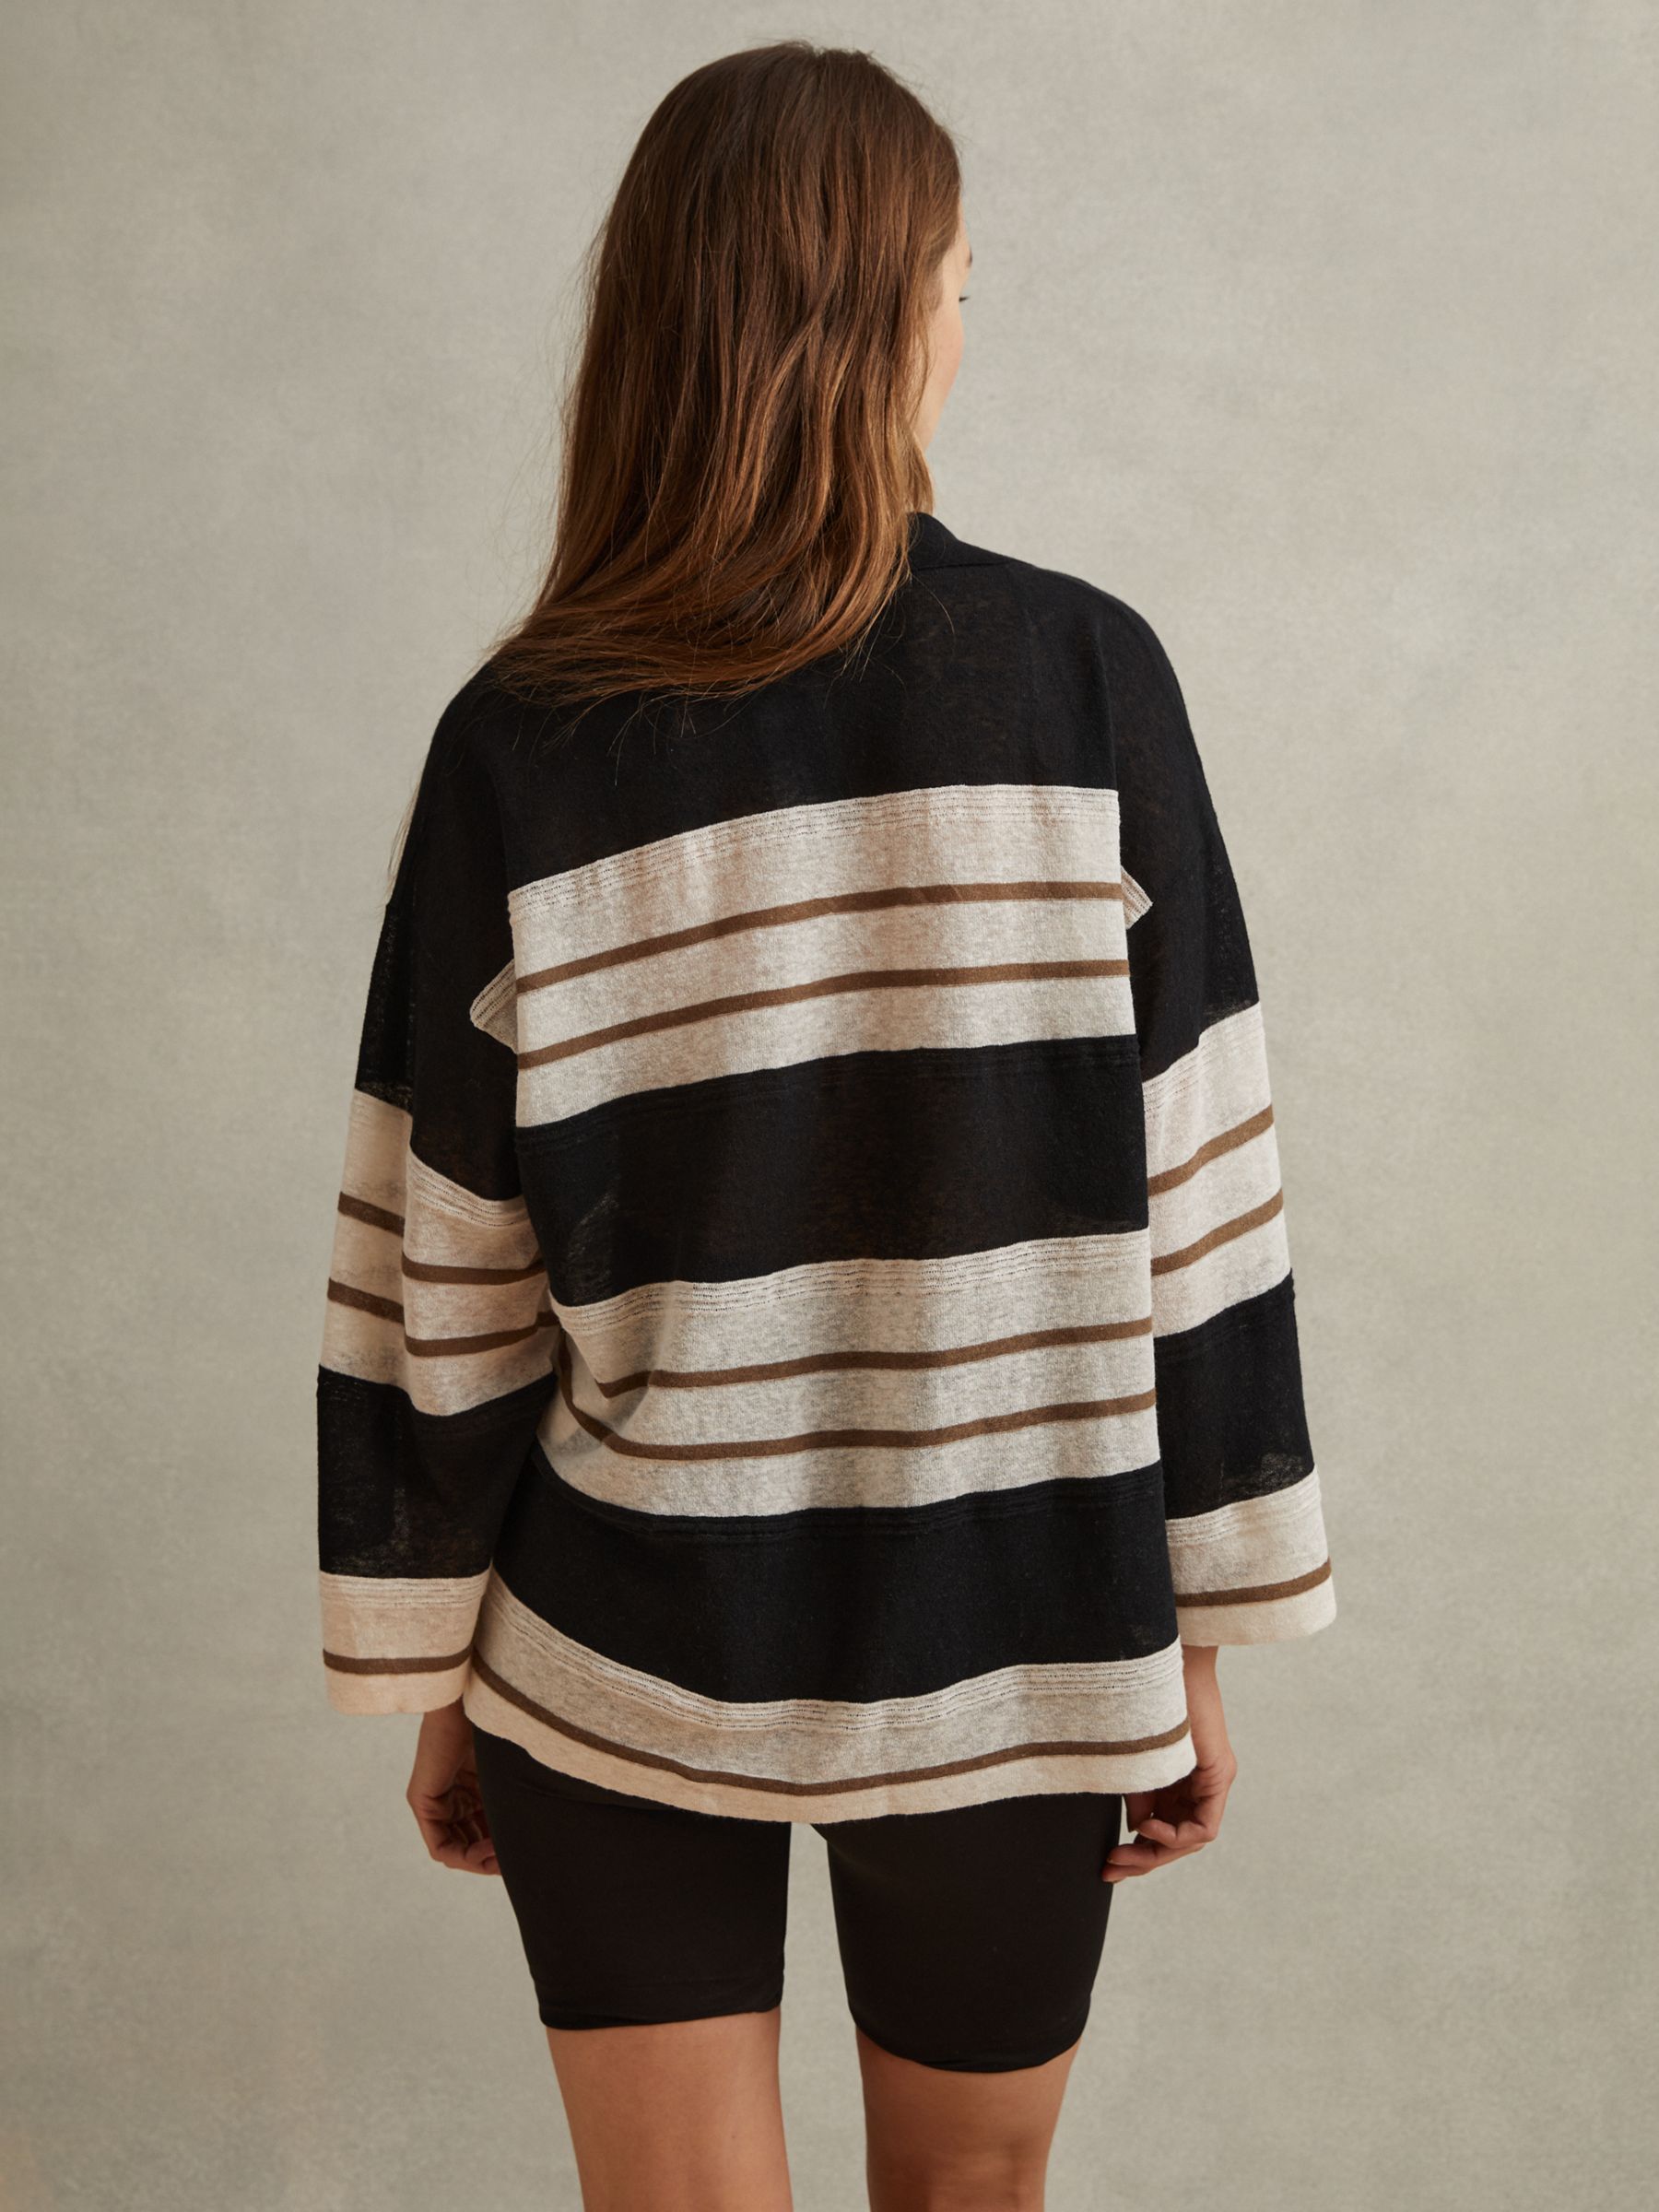 Reiss Chloe Striped Cotton Linen Blend Top, Black/Multi, XS